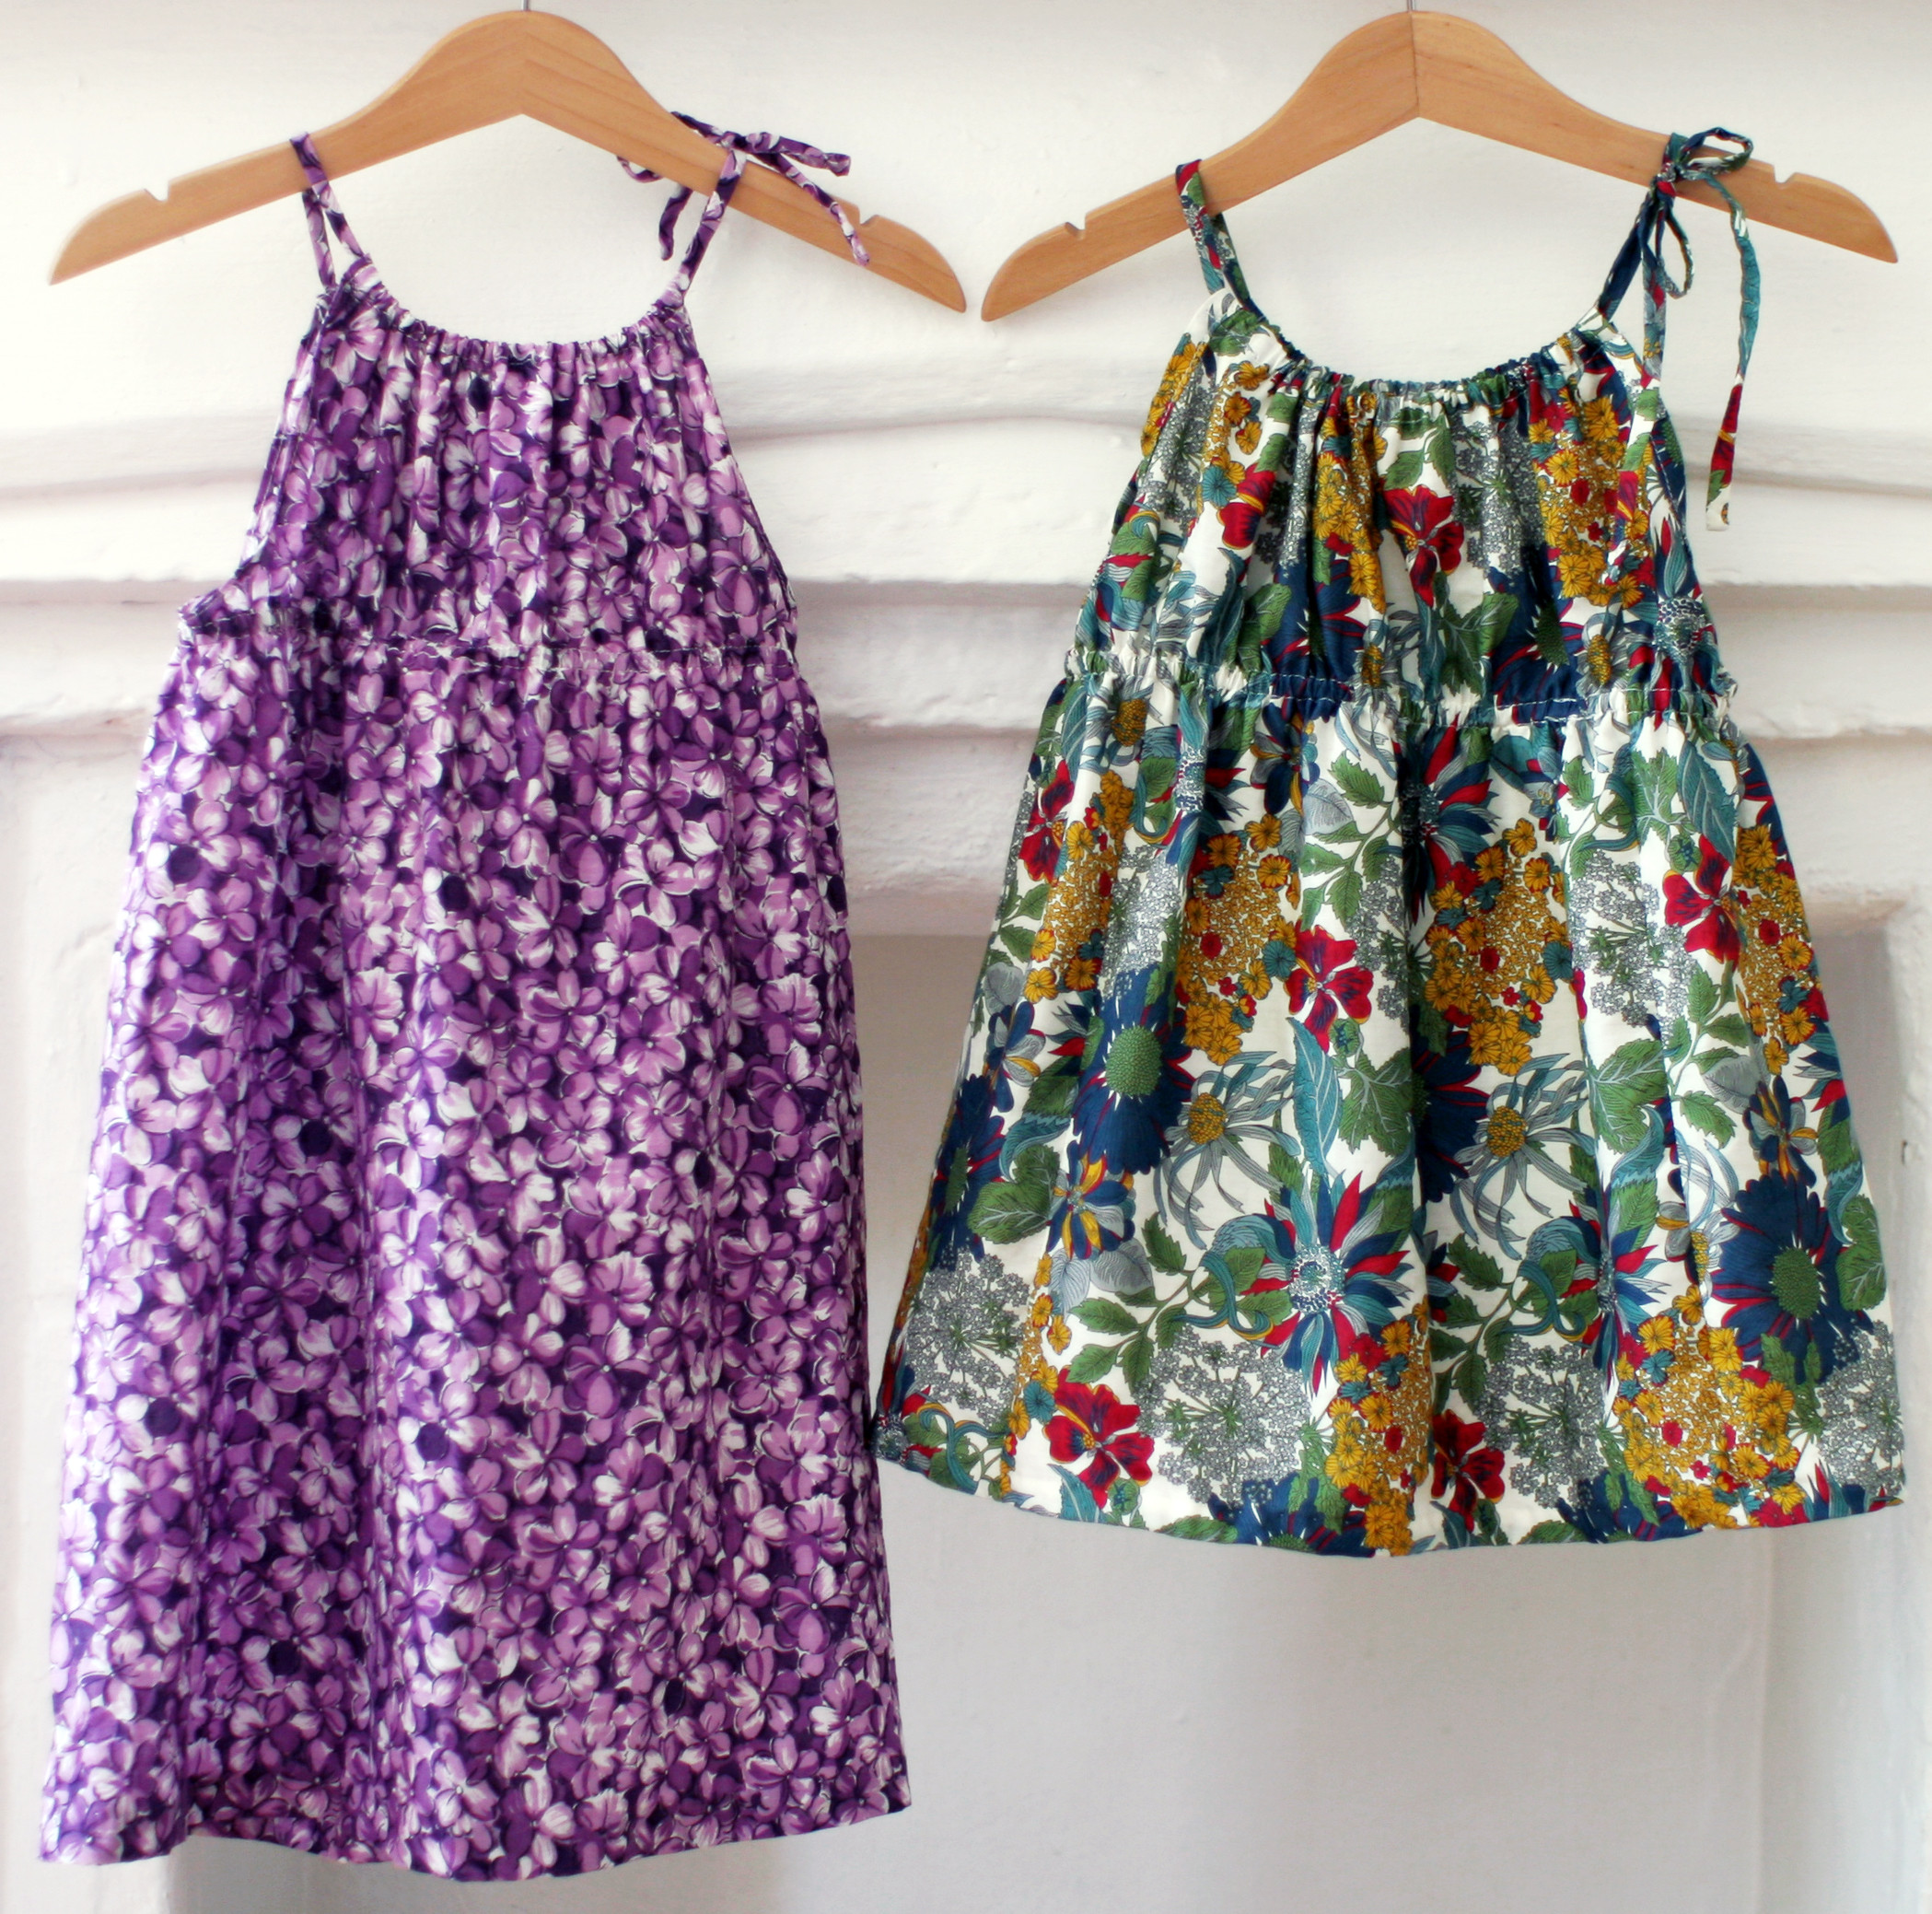 DIY Toddler Dress
 DIY Sister Dresses Sundress